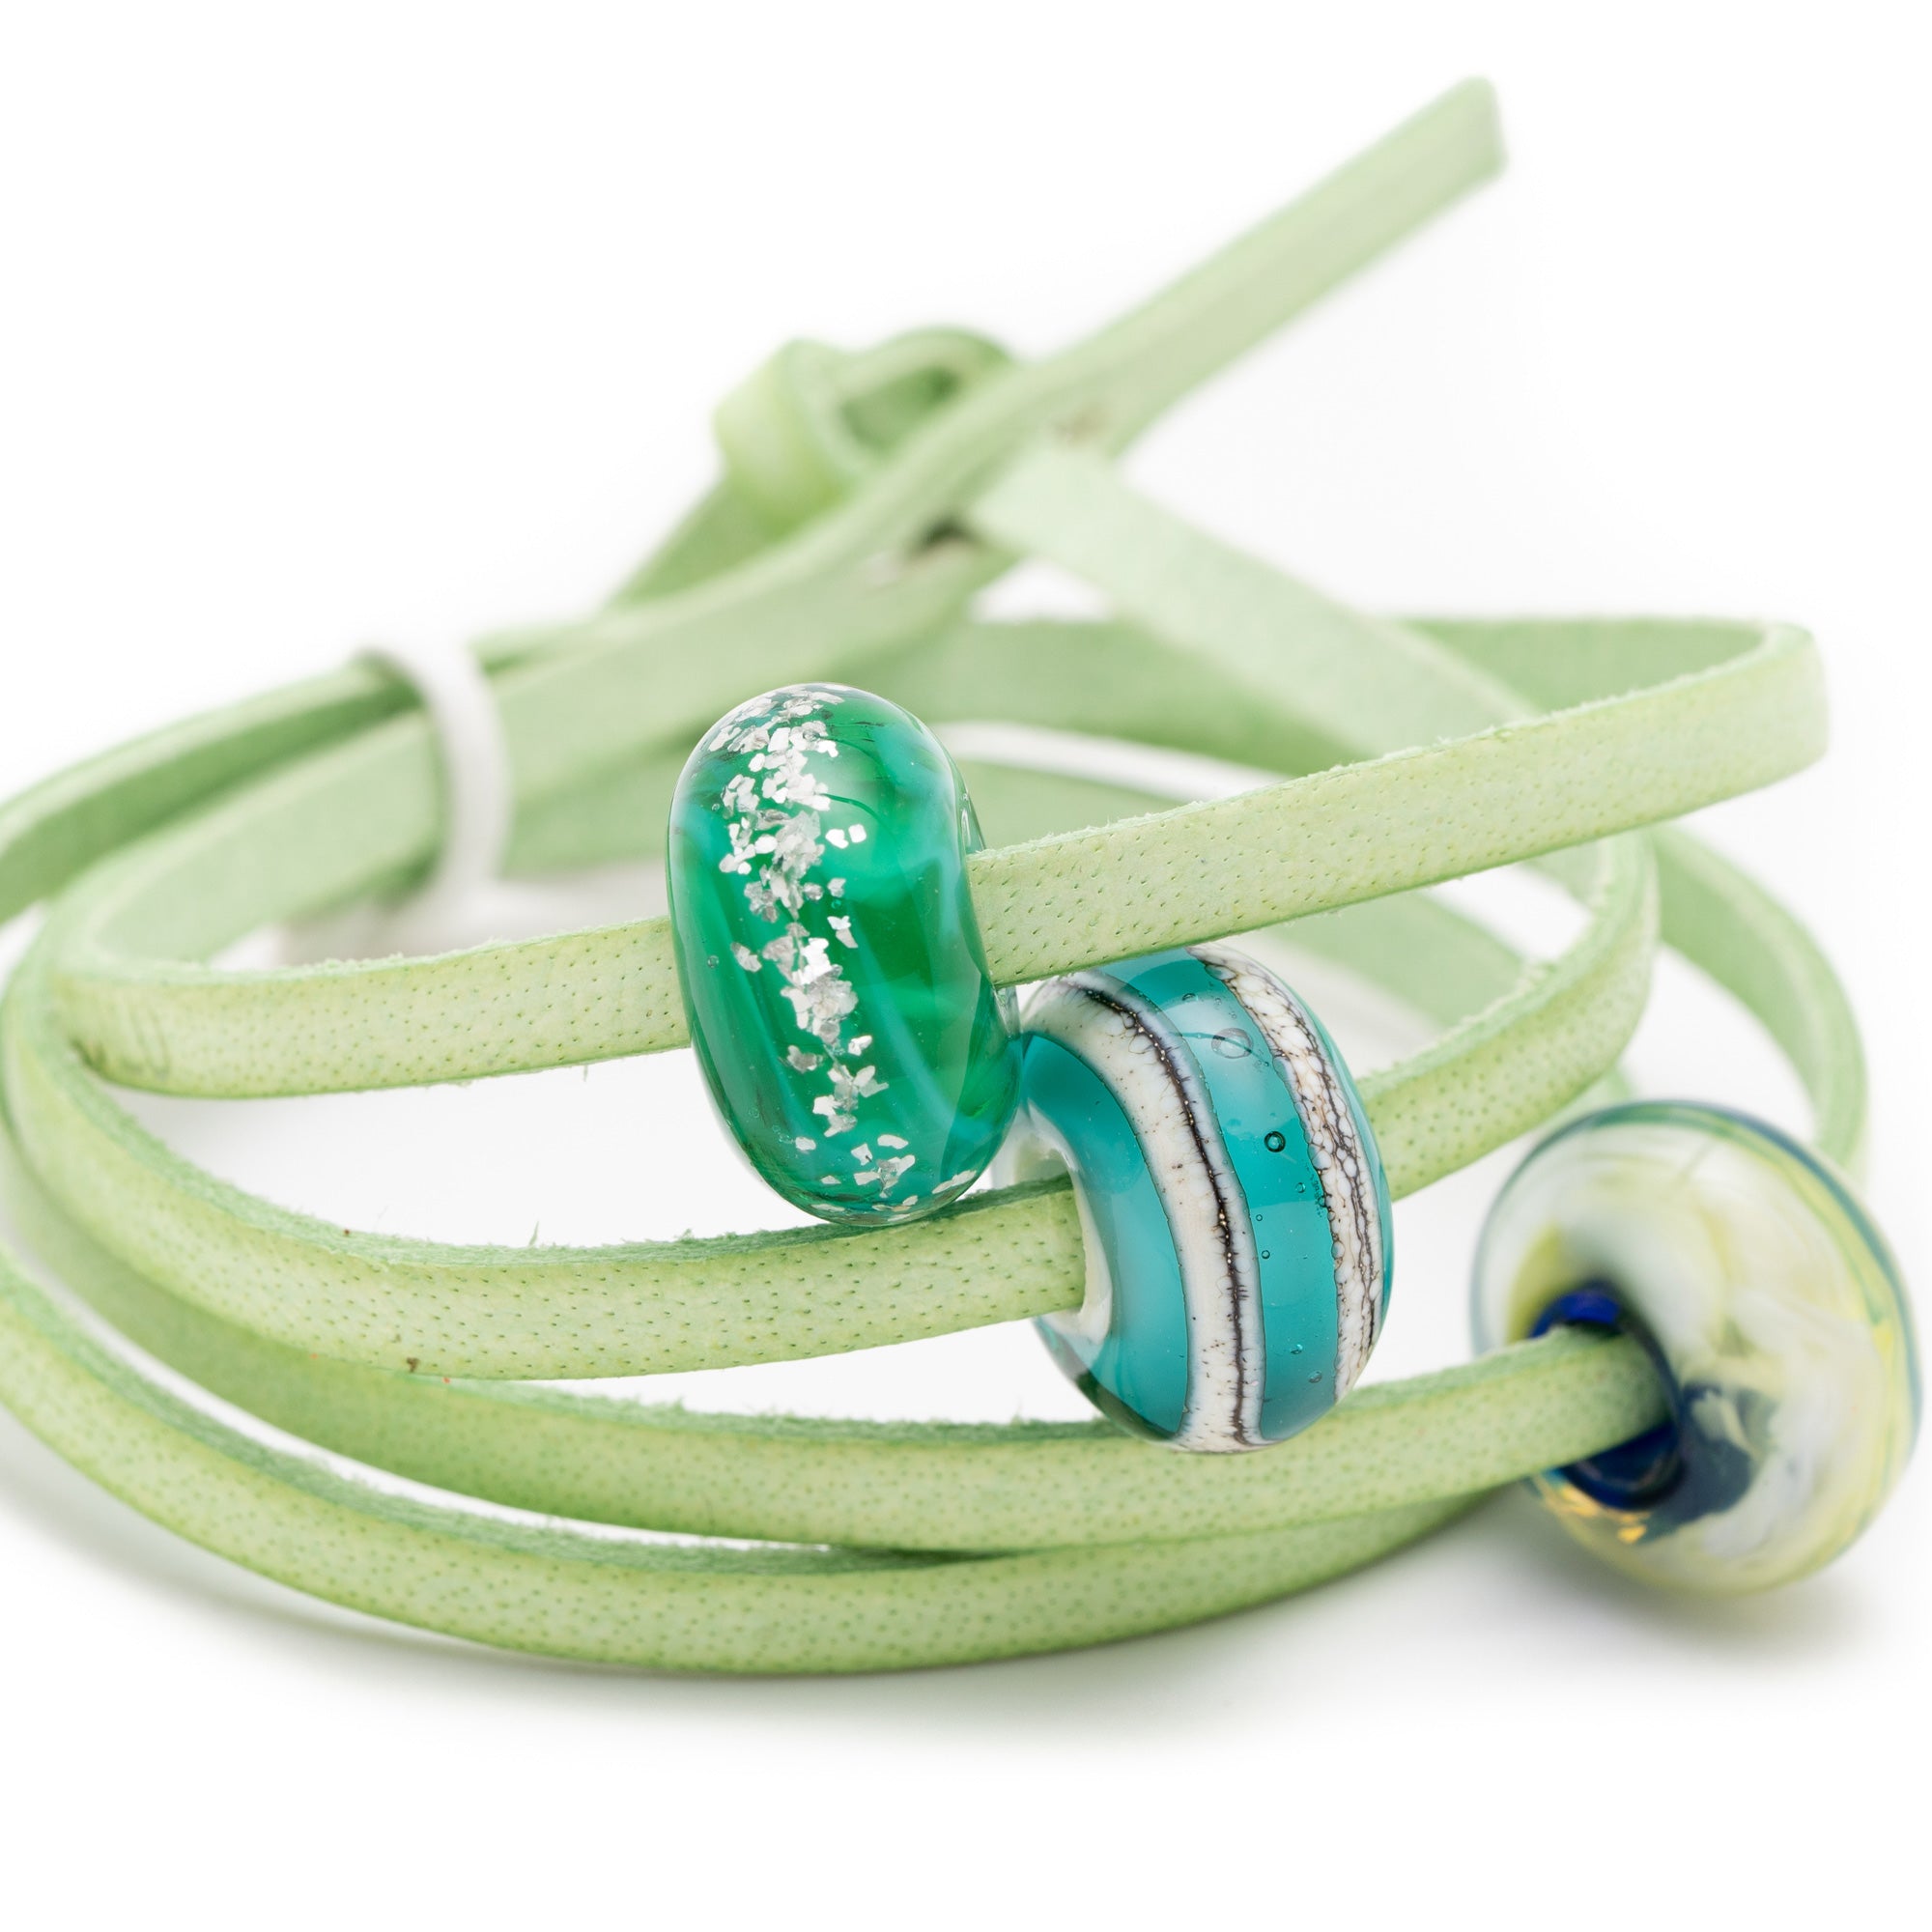 Green shiny glass beads on mint green leather wrap bracelet.